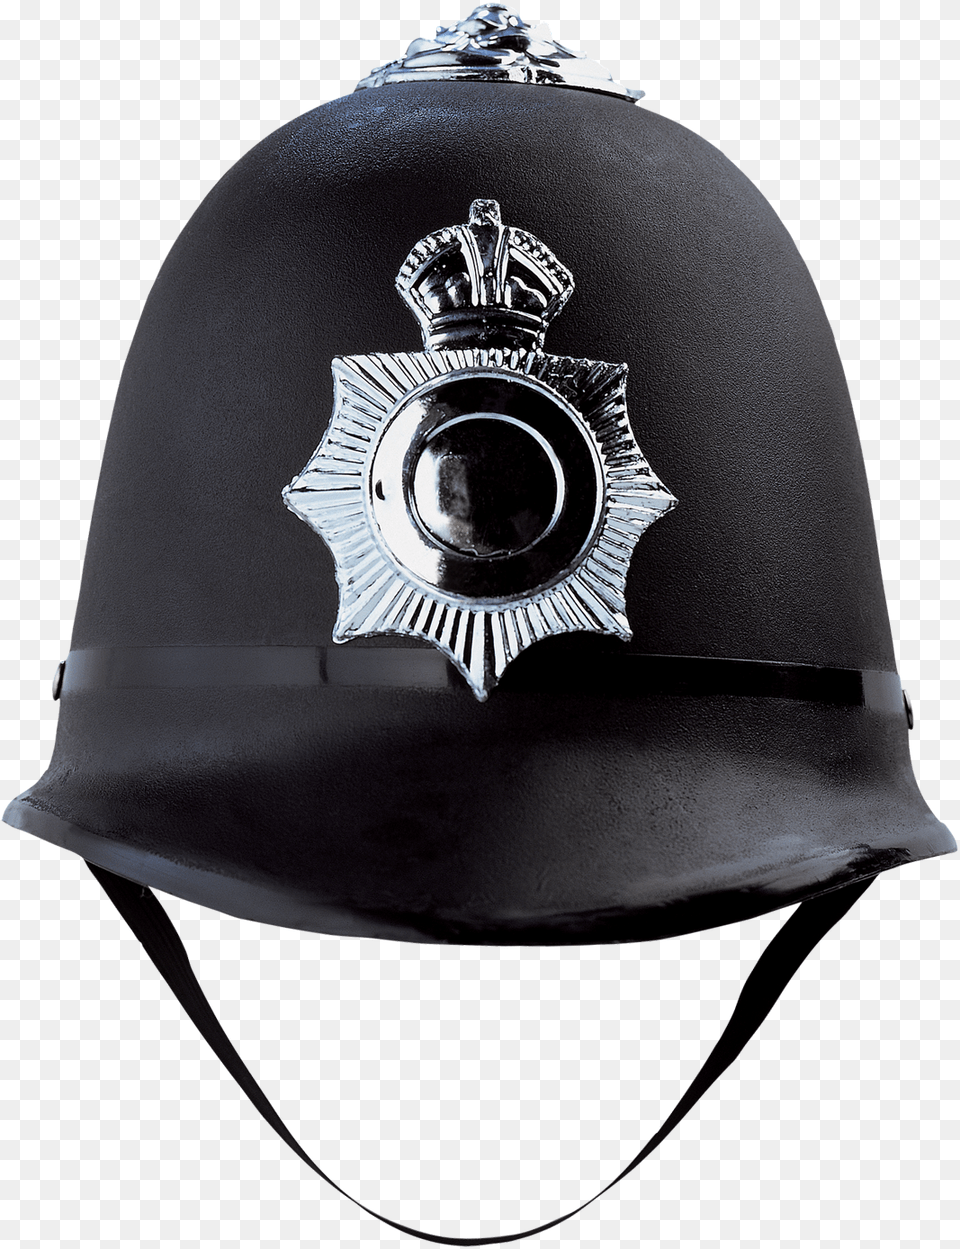 Police Image Police Helmet, Clothing, Hardhat, Crash Helmet, Accessories Png